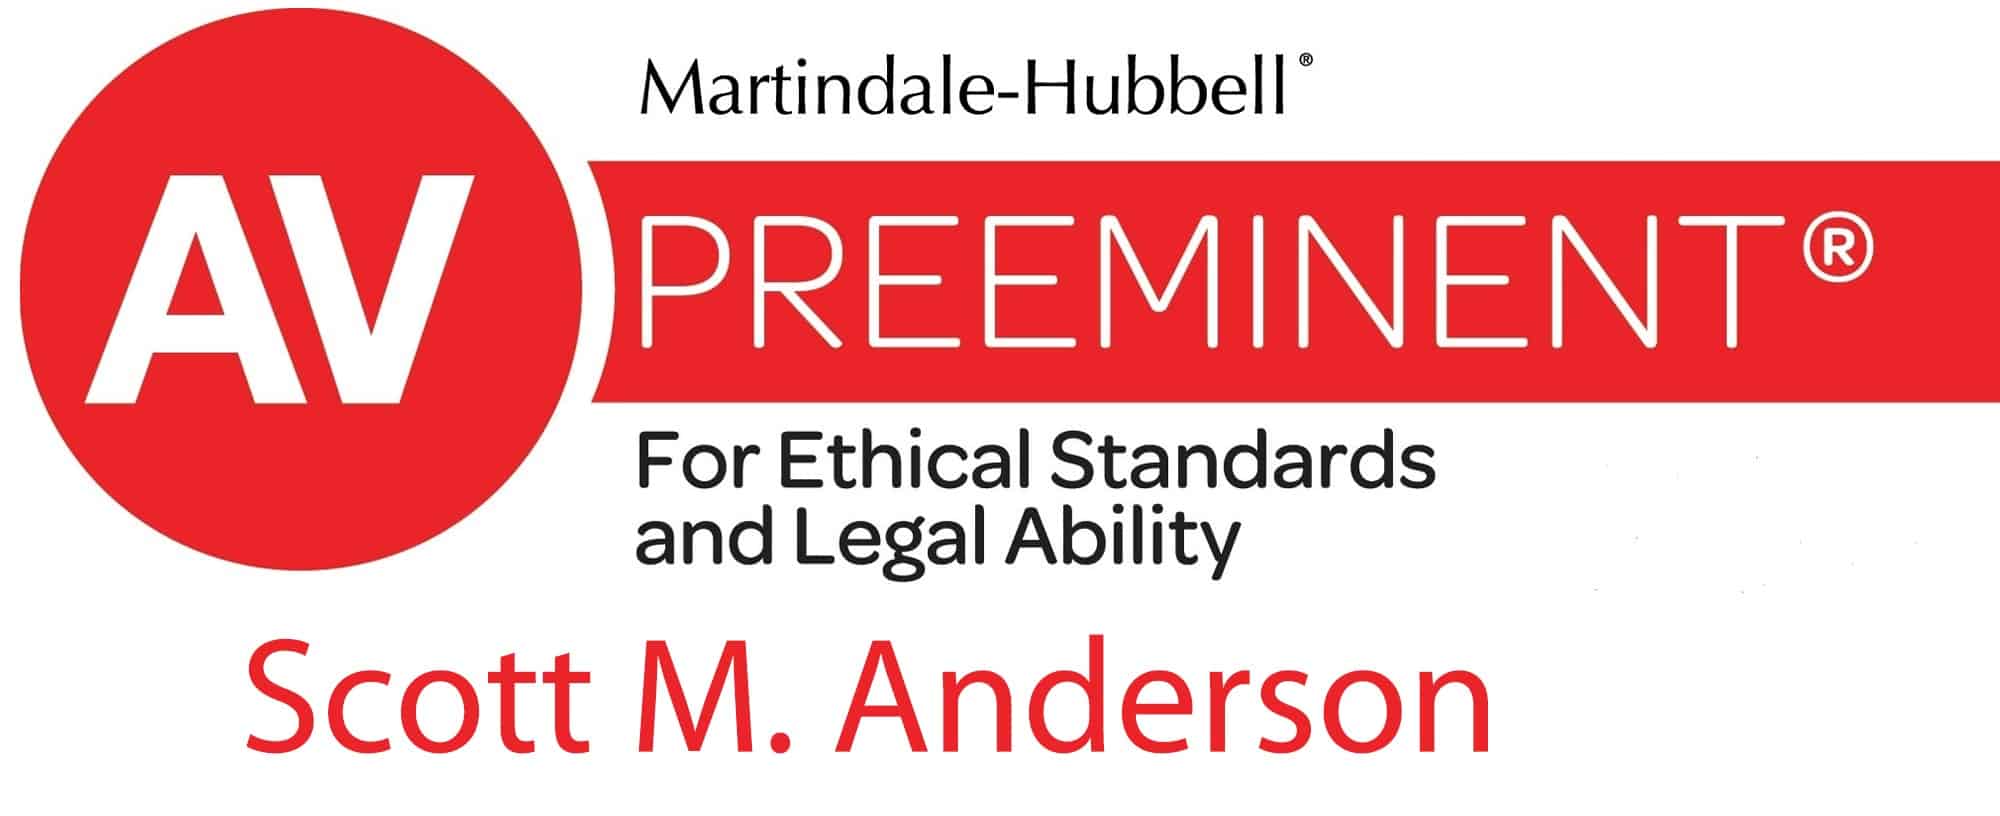 Martindale-Hubbell AV Preeminent for ethical standards and legal ability Scott M Anderson logo